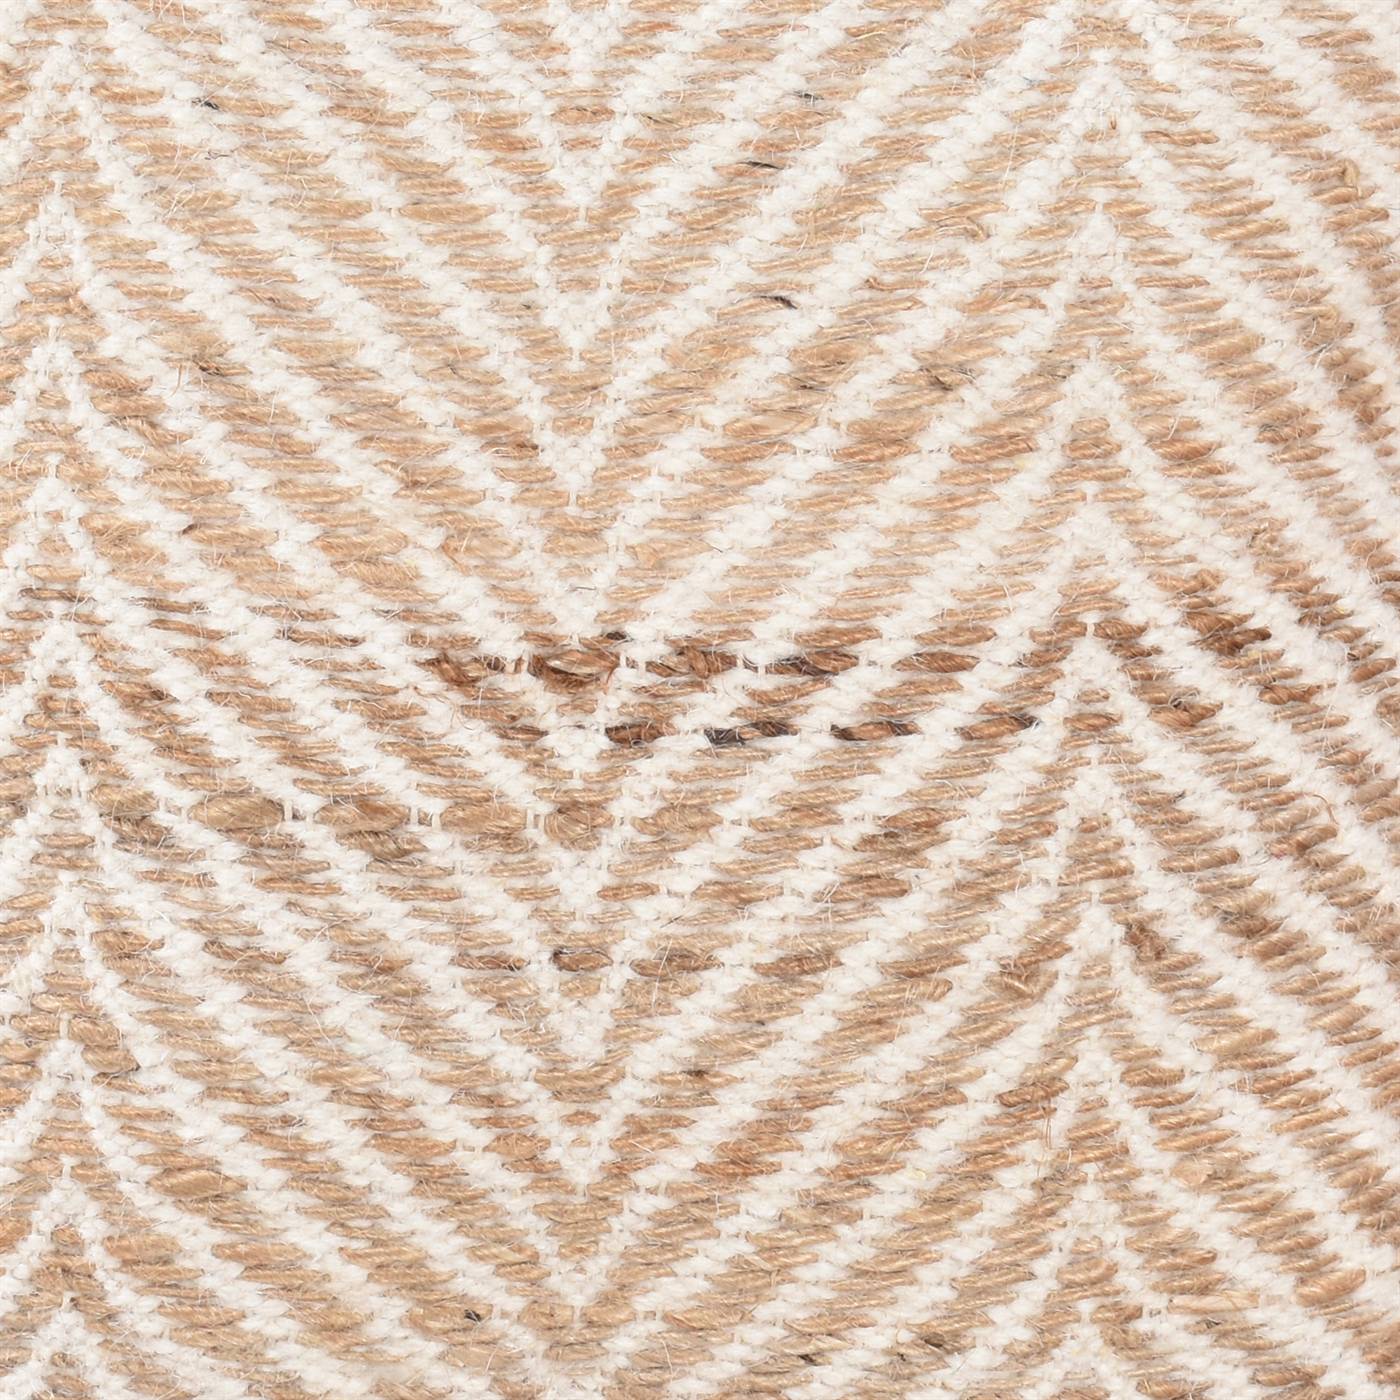 Genil Cushion, 45x45 cm, Natural, Natural White, Jute, Wool, Hand Woven, Pitloom, Flat Weave 